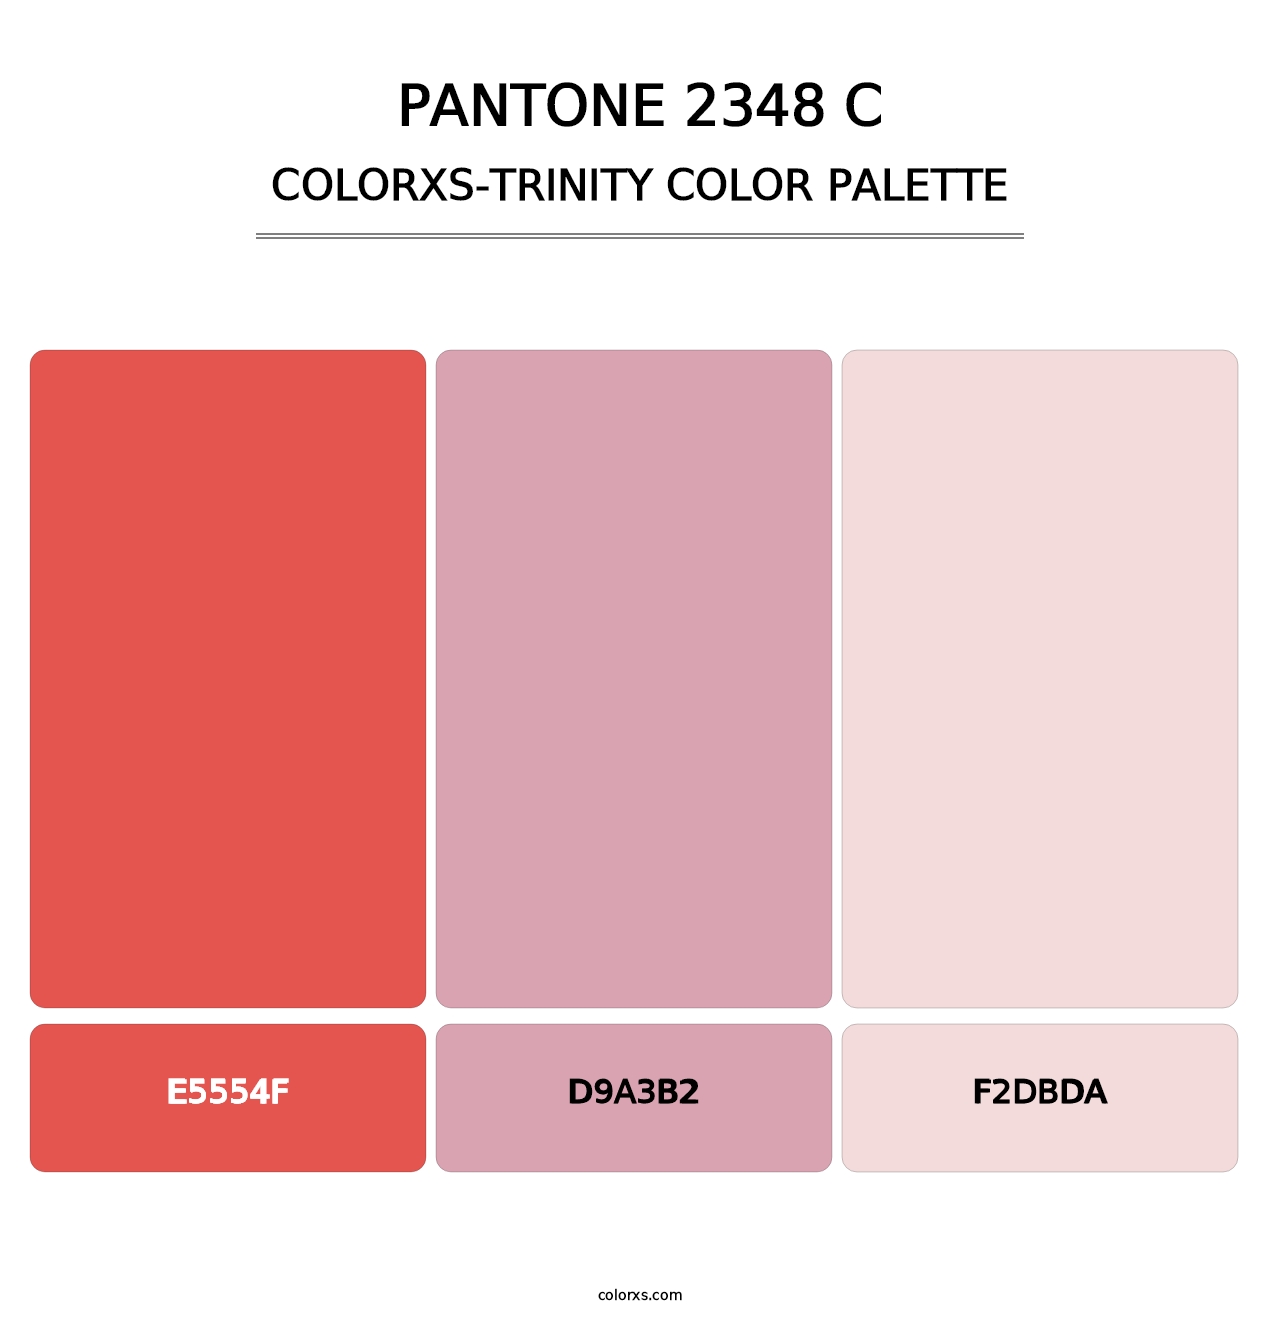 PANTONE 2348 C - Colorxs Trinity Palette